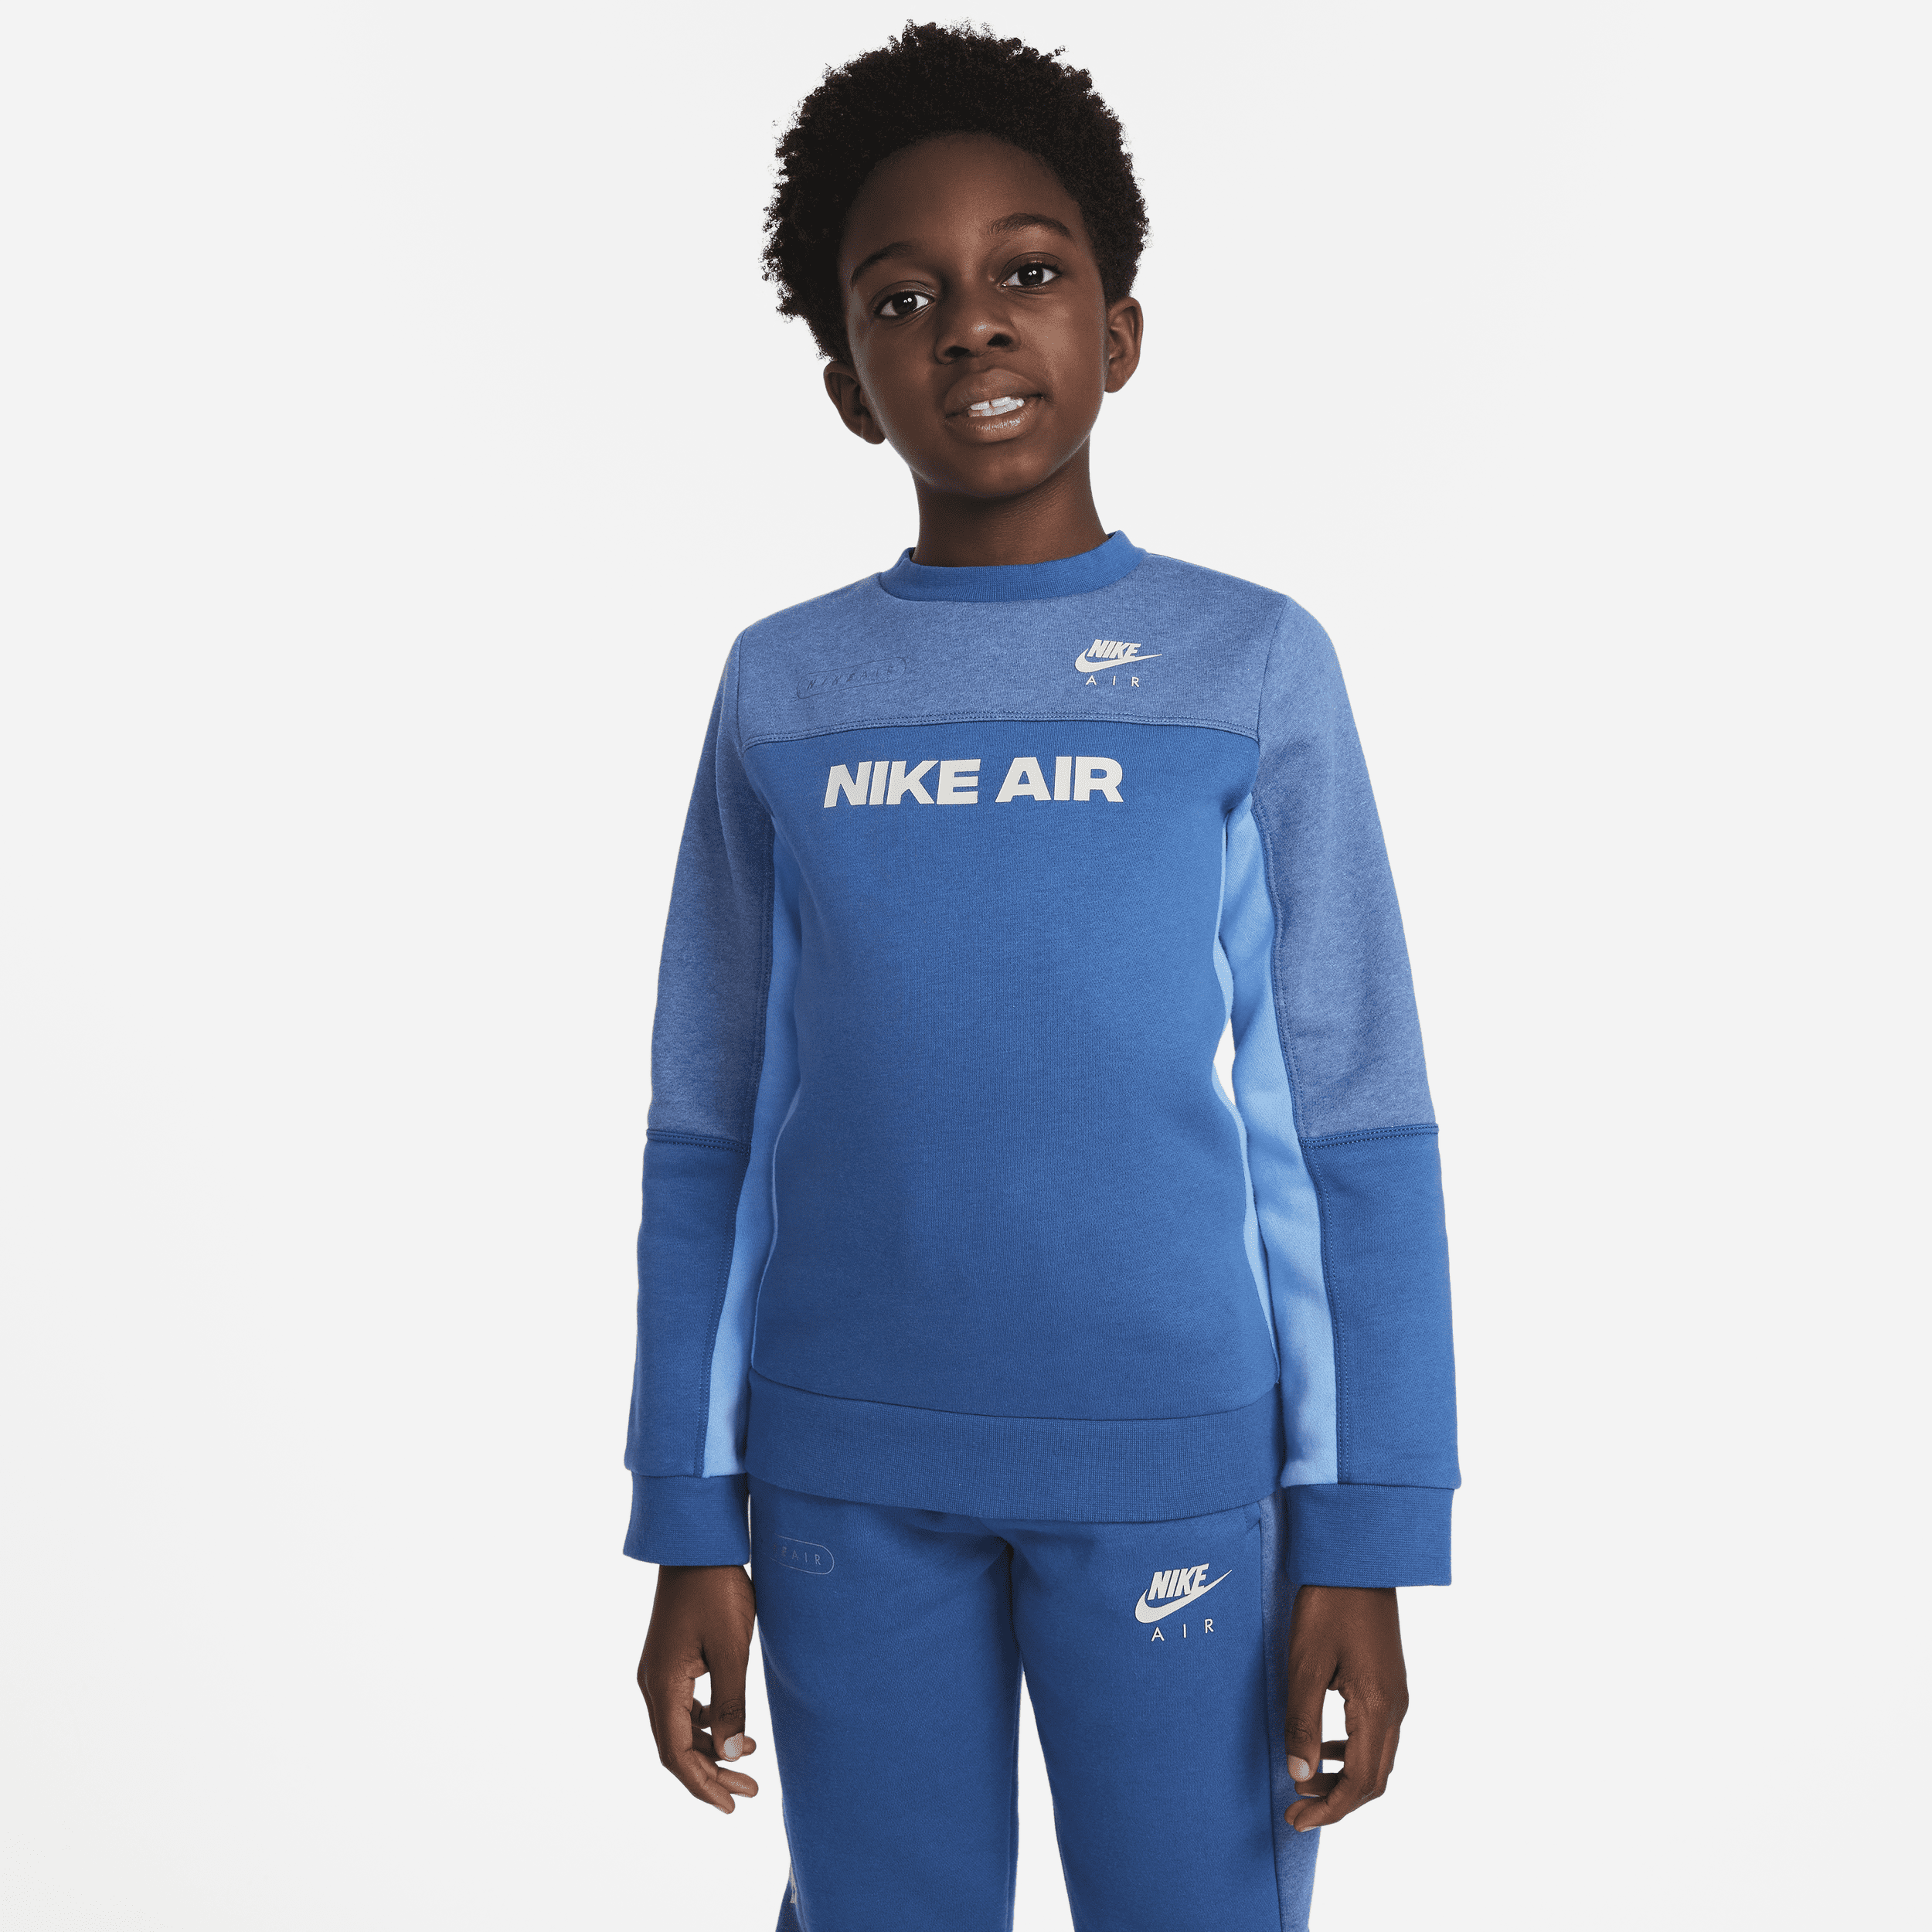 Rundhalset Nike Air-sweatshirt til større børn (drenge) - blå